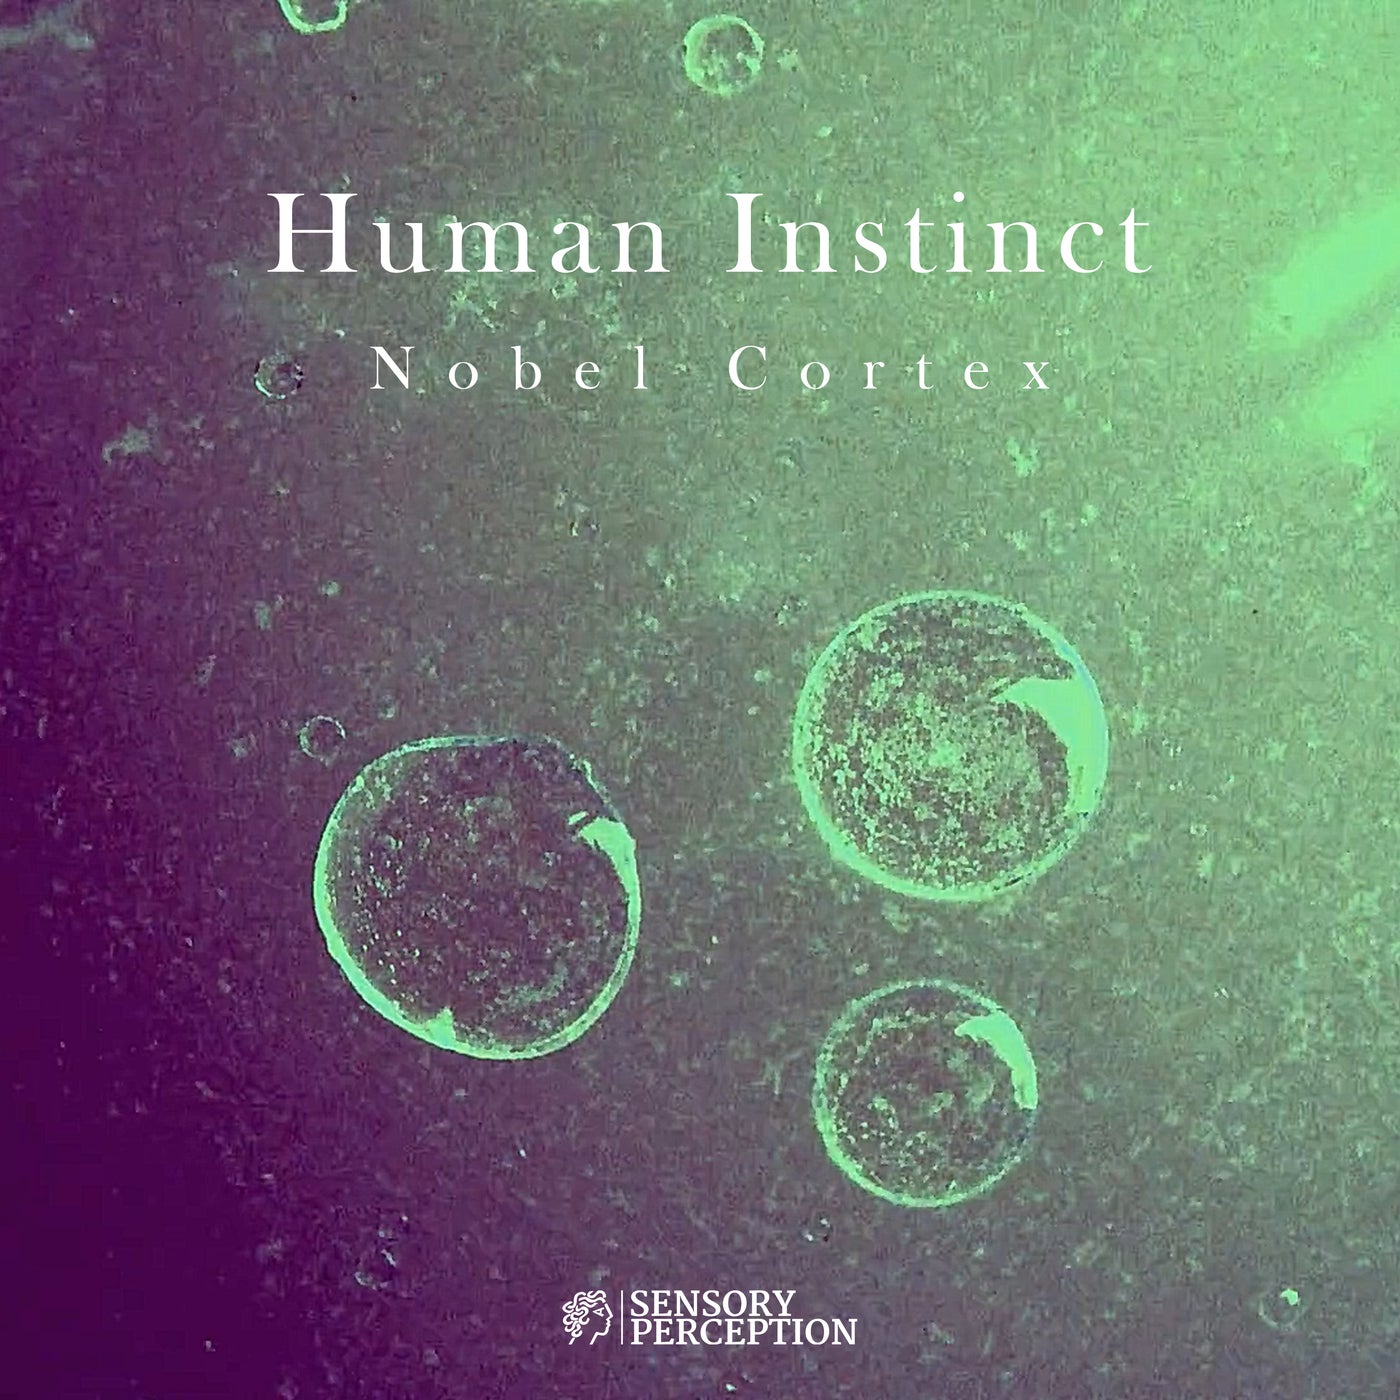 Human Instinct